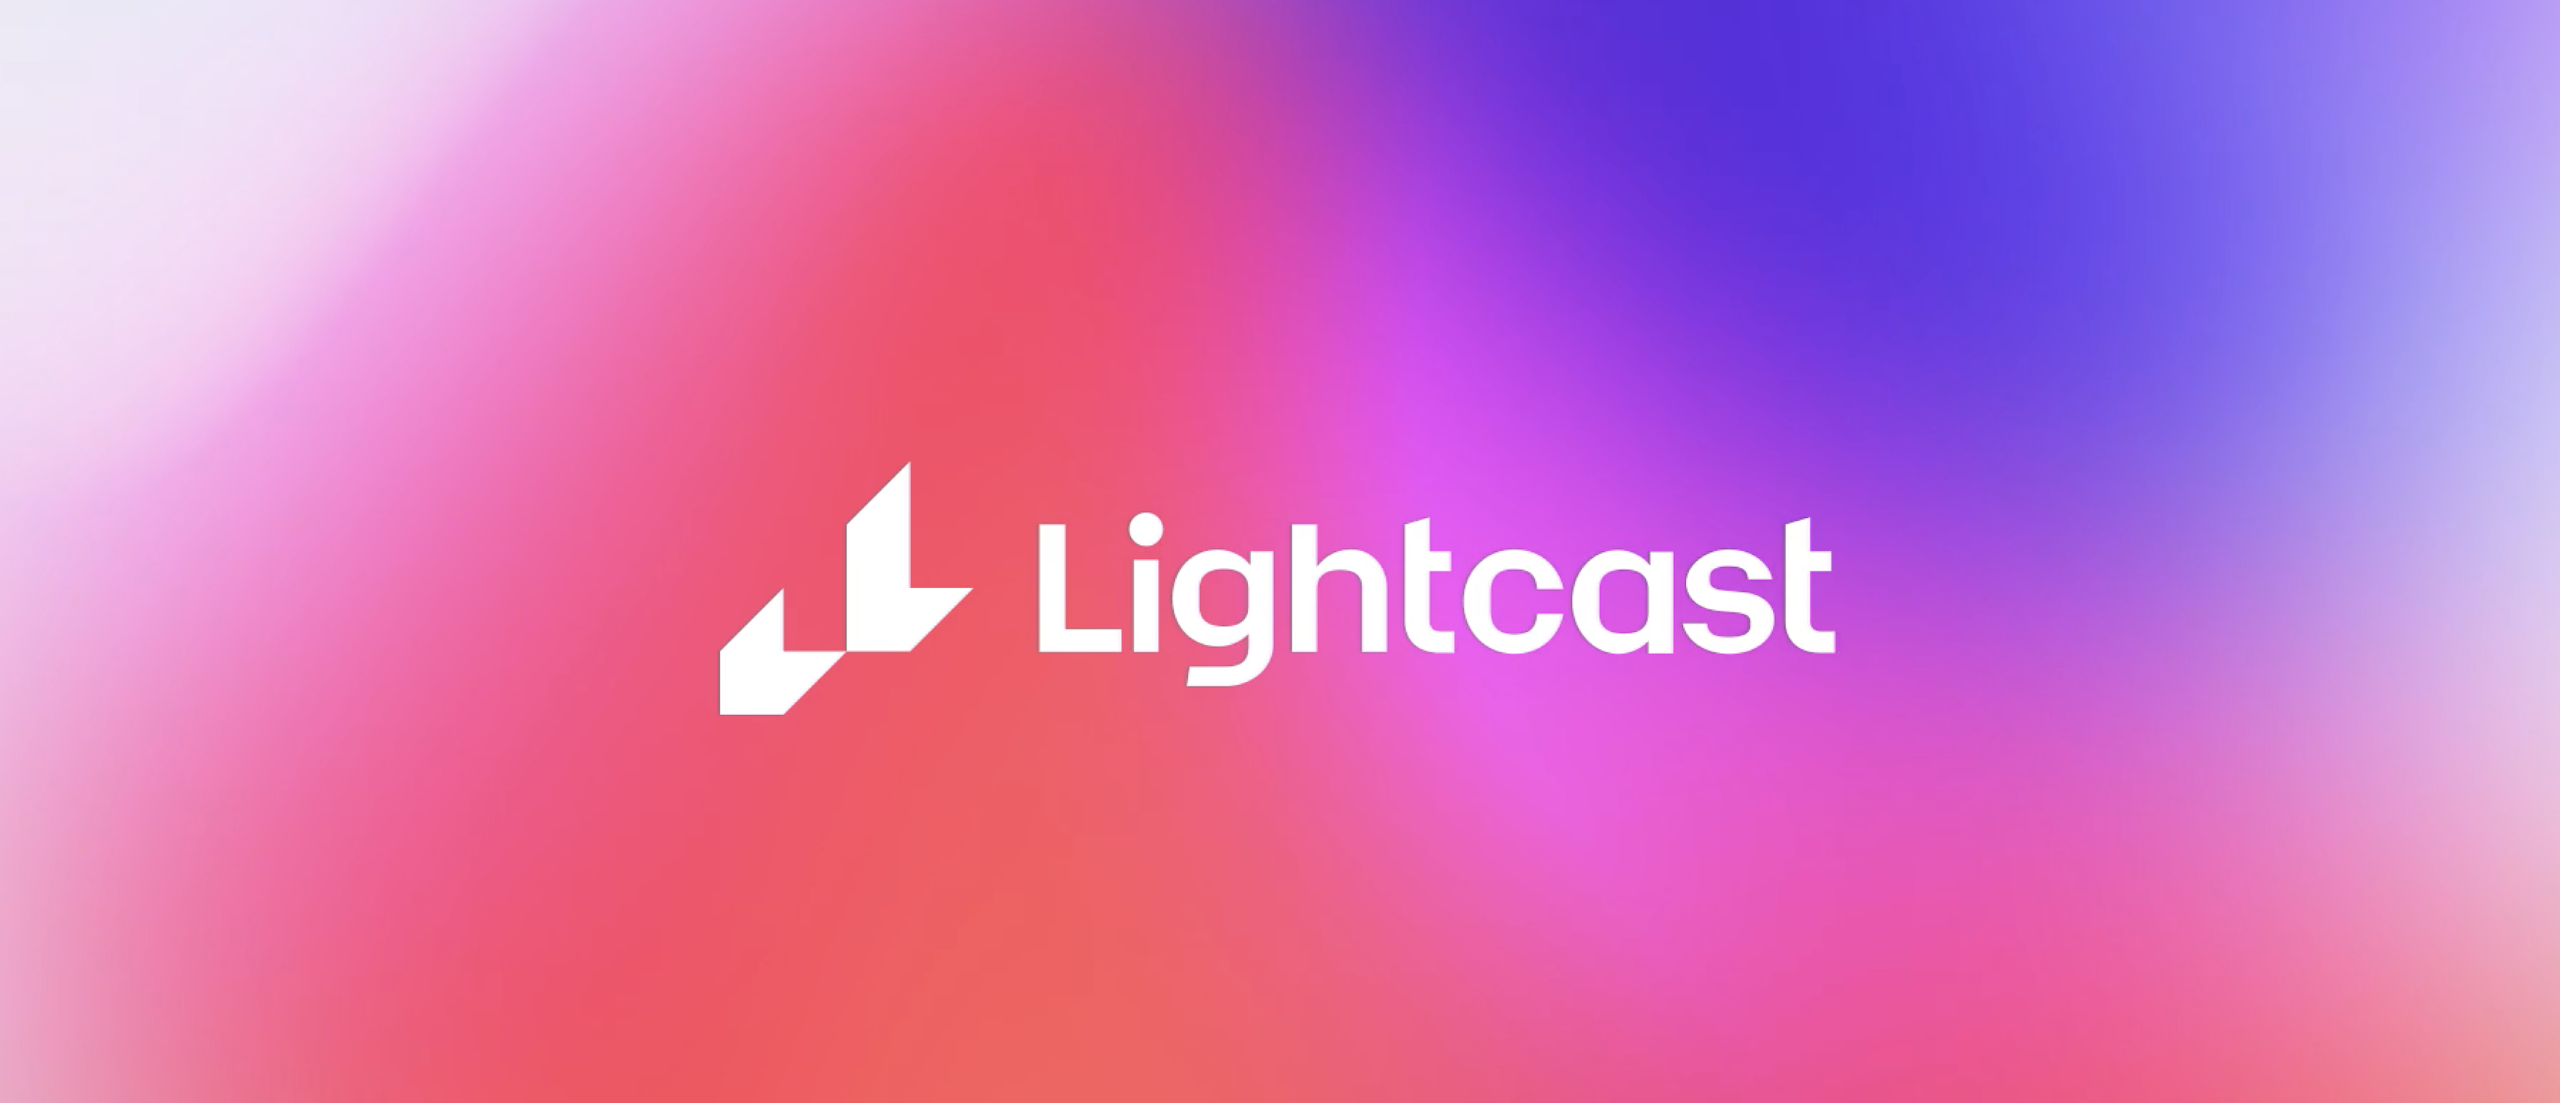 image of Lightcast gradiant